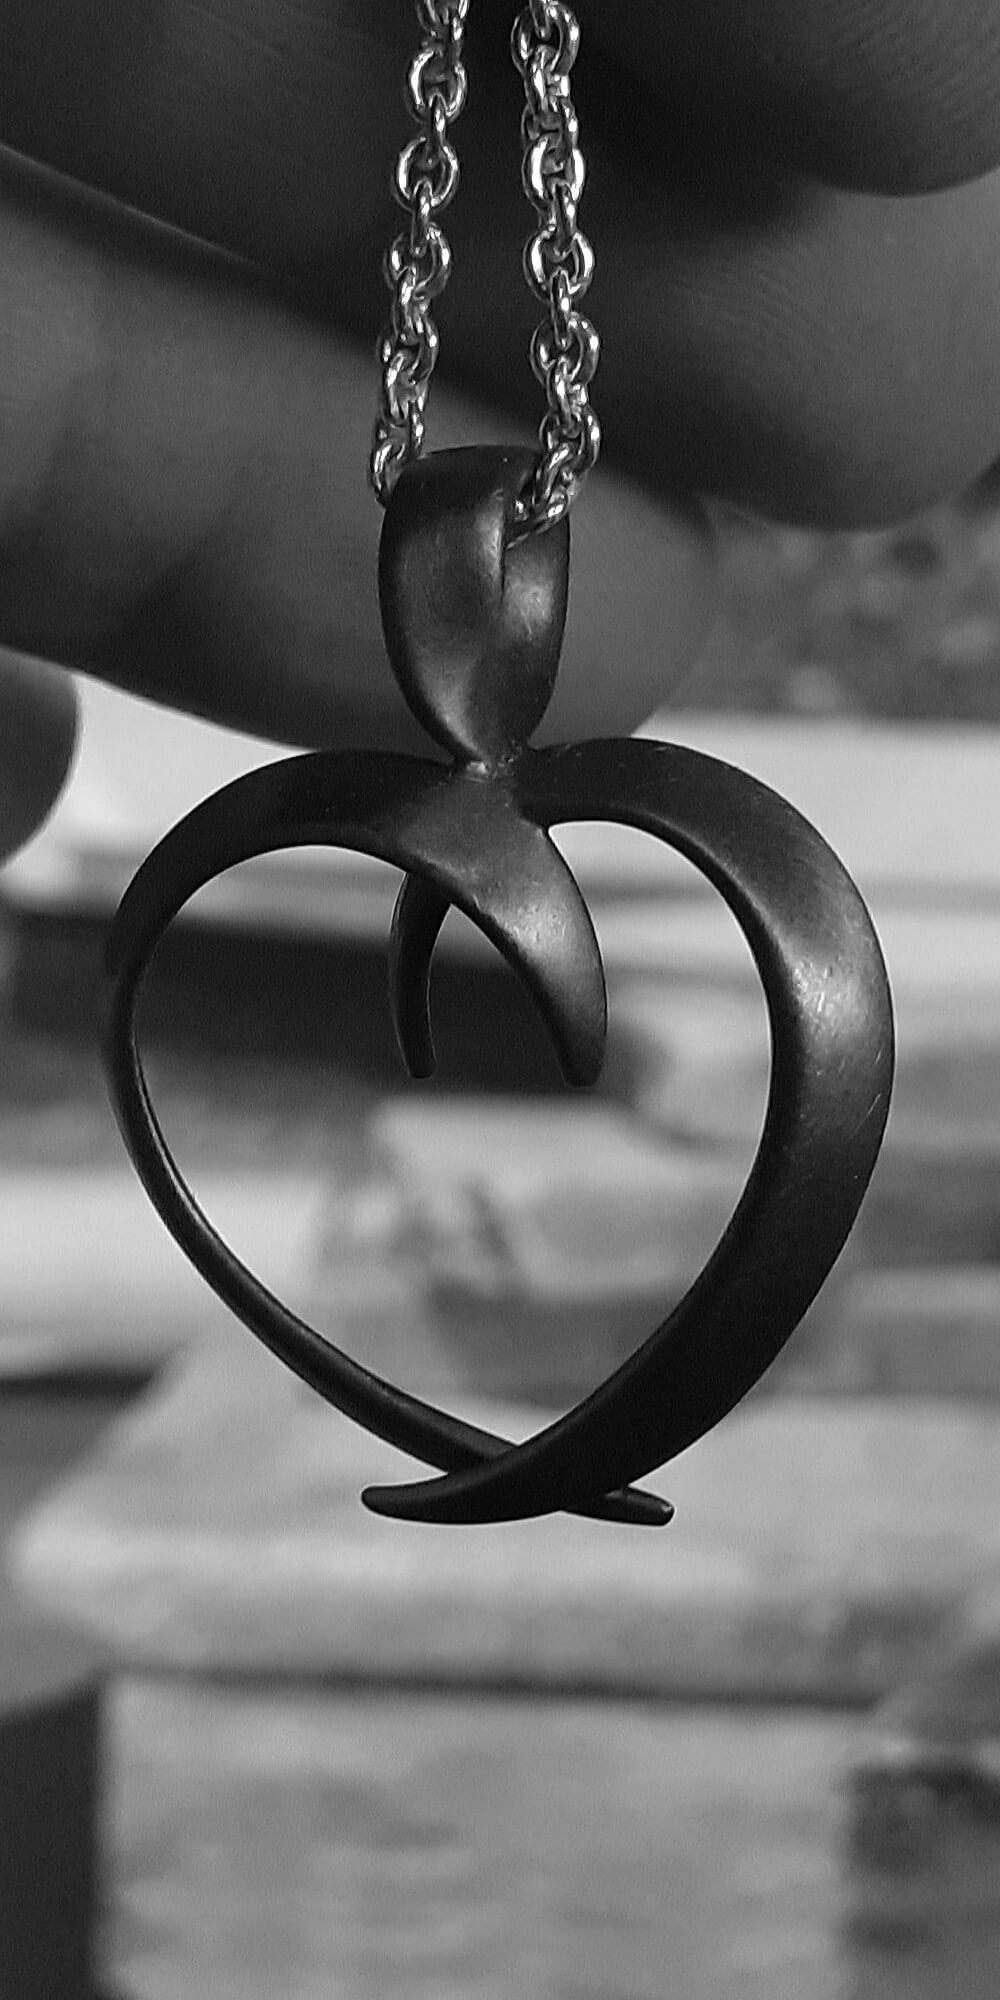 Open heart mobius pendant